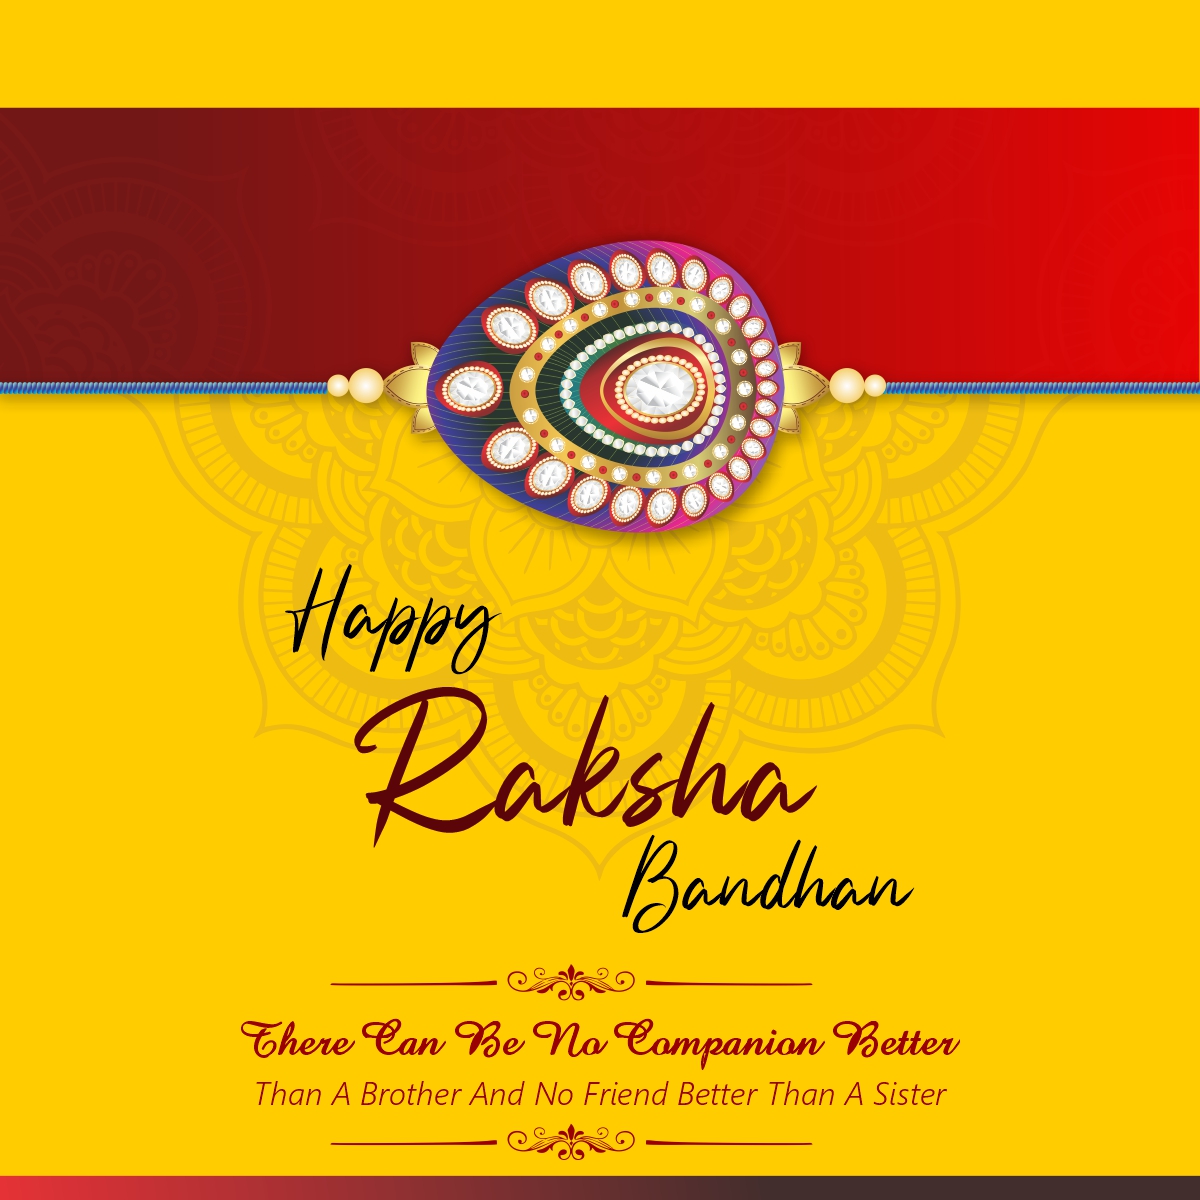 Download Beautiful Rakhi Banner For Happy Raksha Bandhan ...